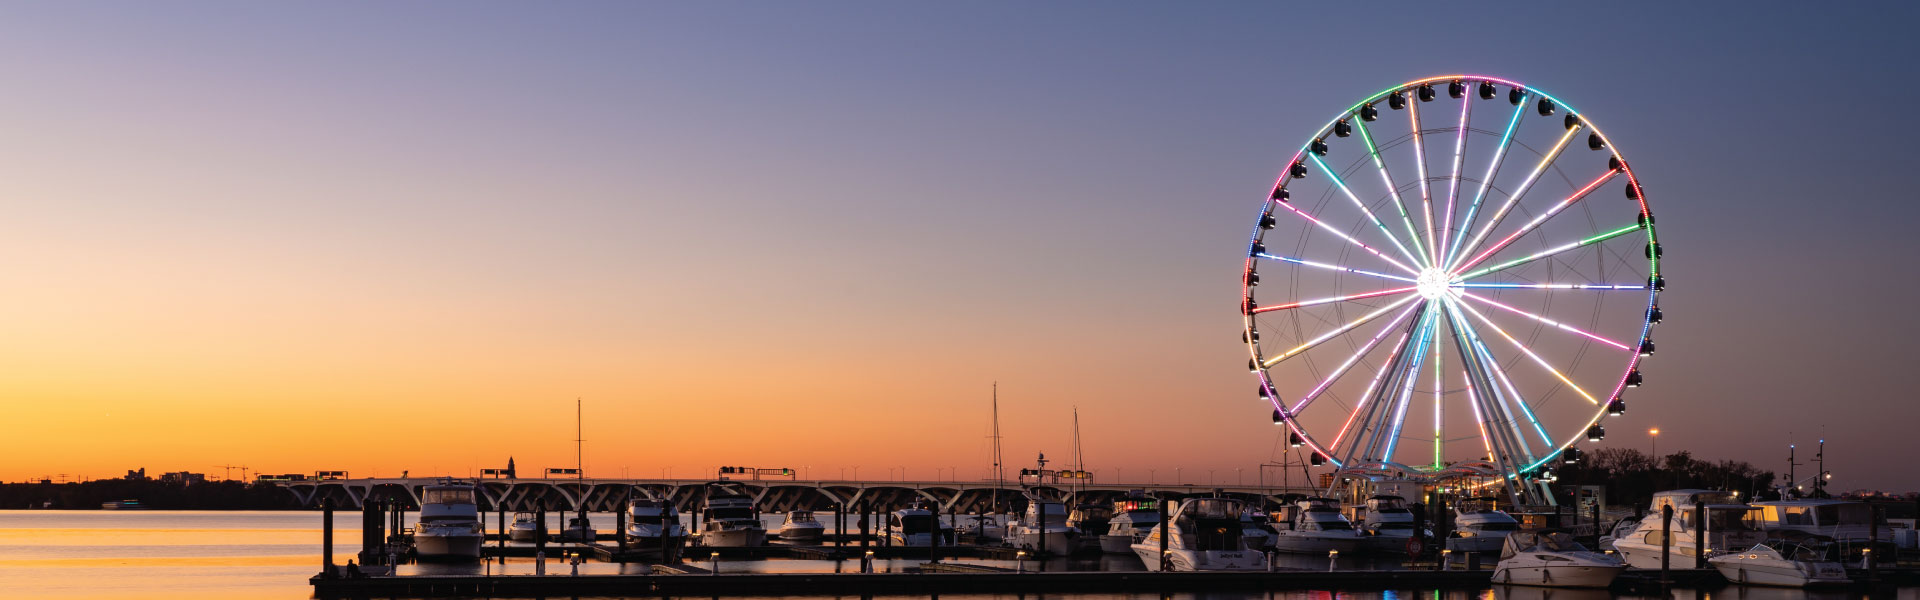 Ferris wheel on the National Harbor at sunset